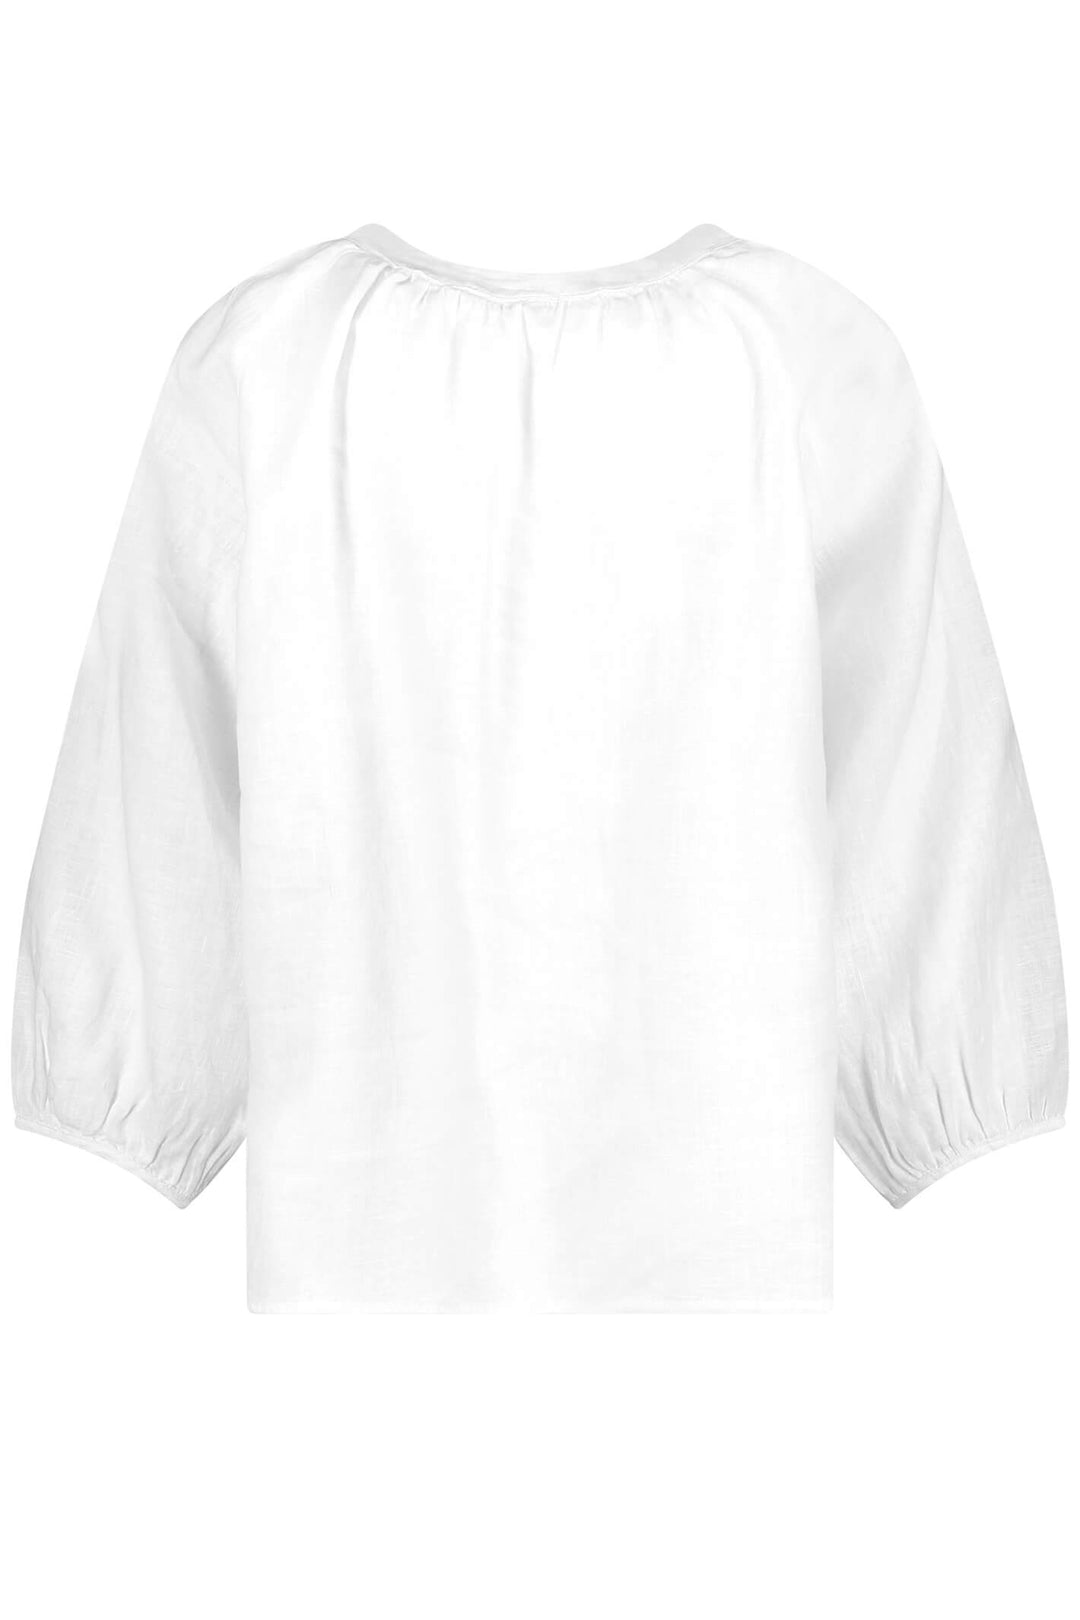 Gerry Weber 860053 White Linen Blouse - Experience Boutique